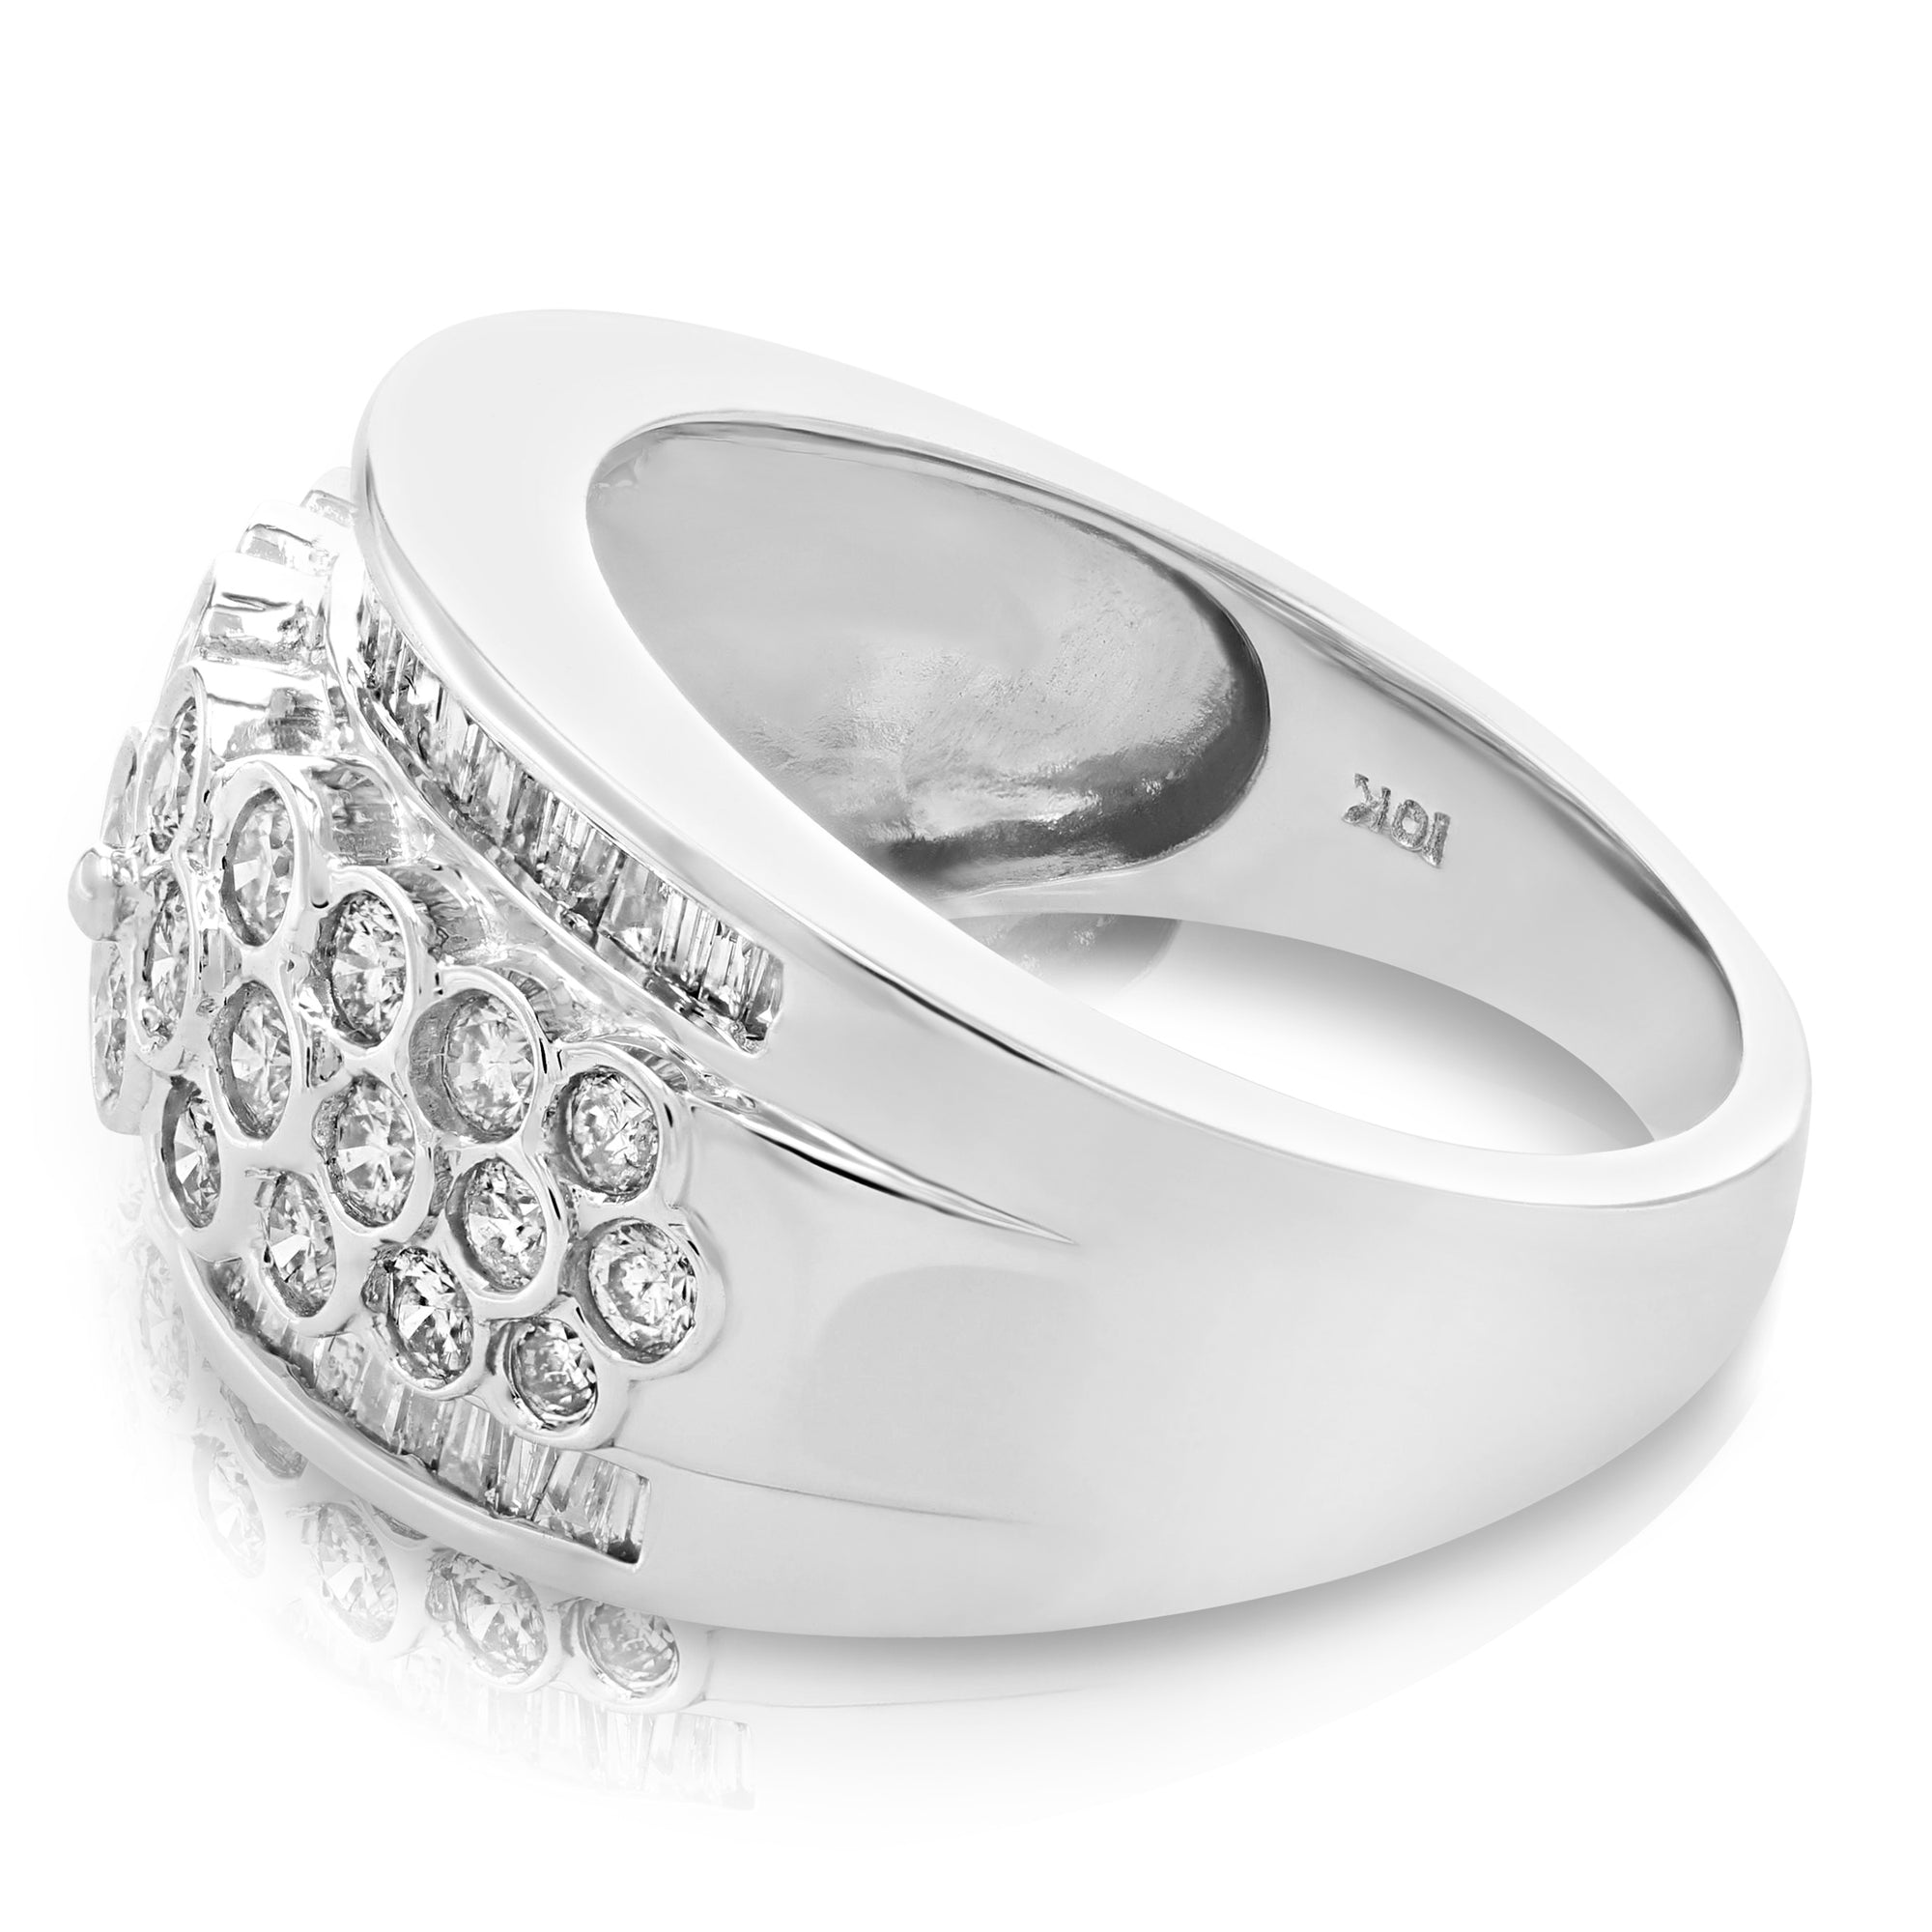 1.50 cttw Diamond Cocktail Ring 10K White Gold Wedding Bridal Engagement Size 7